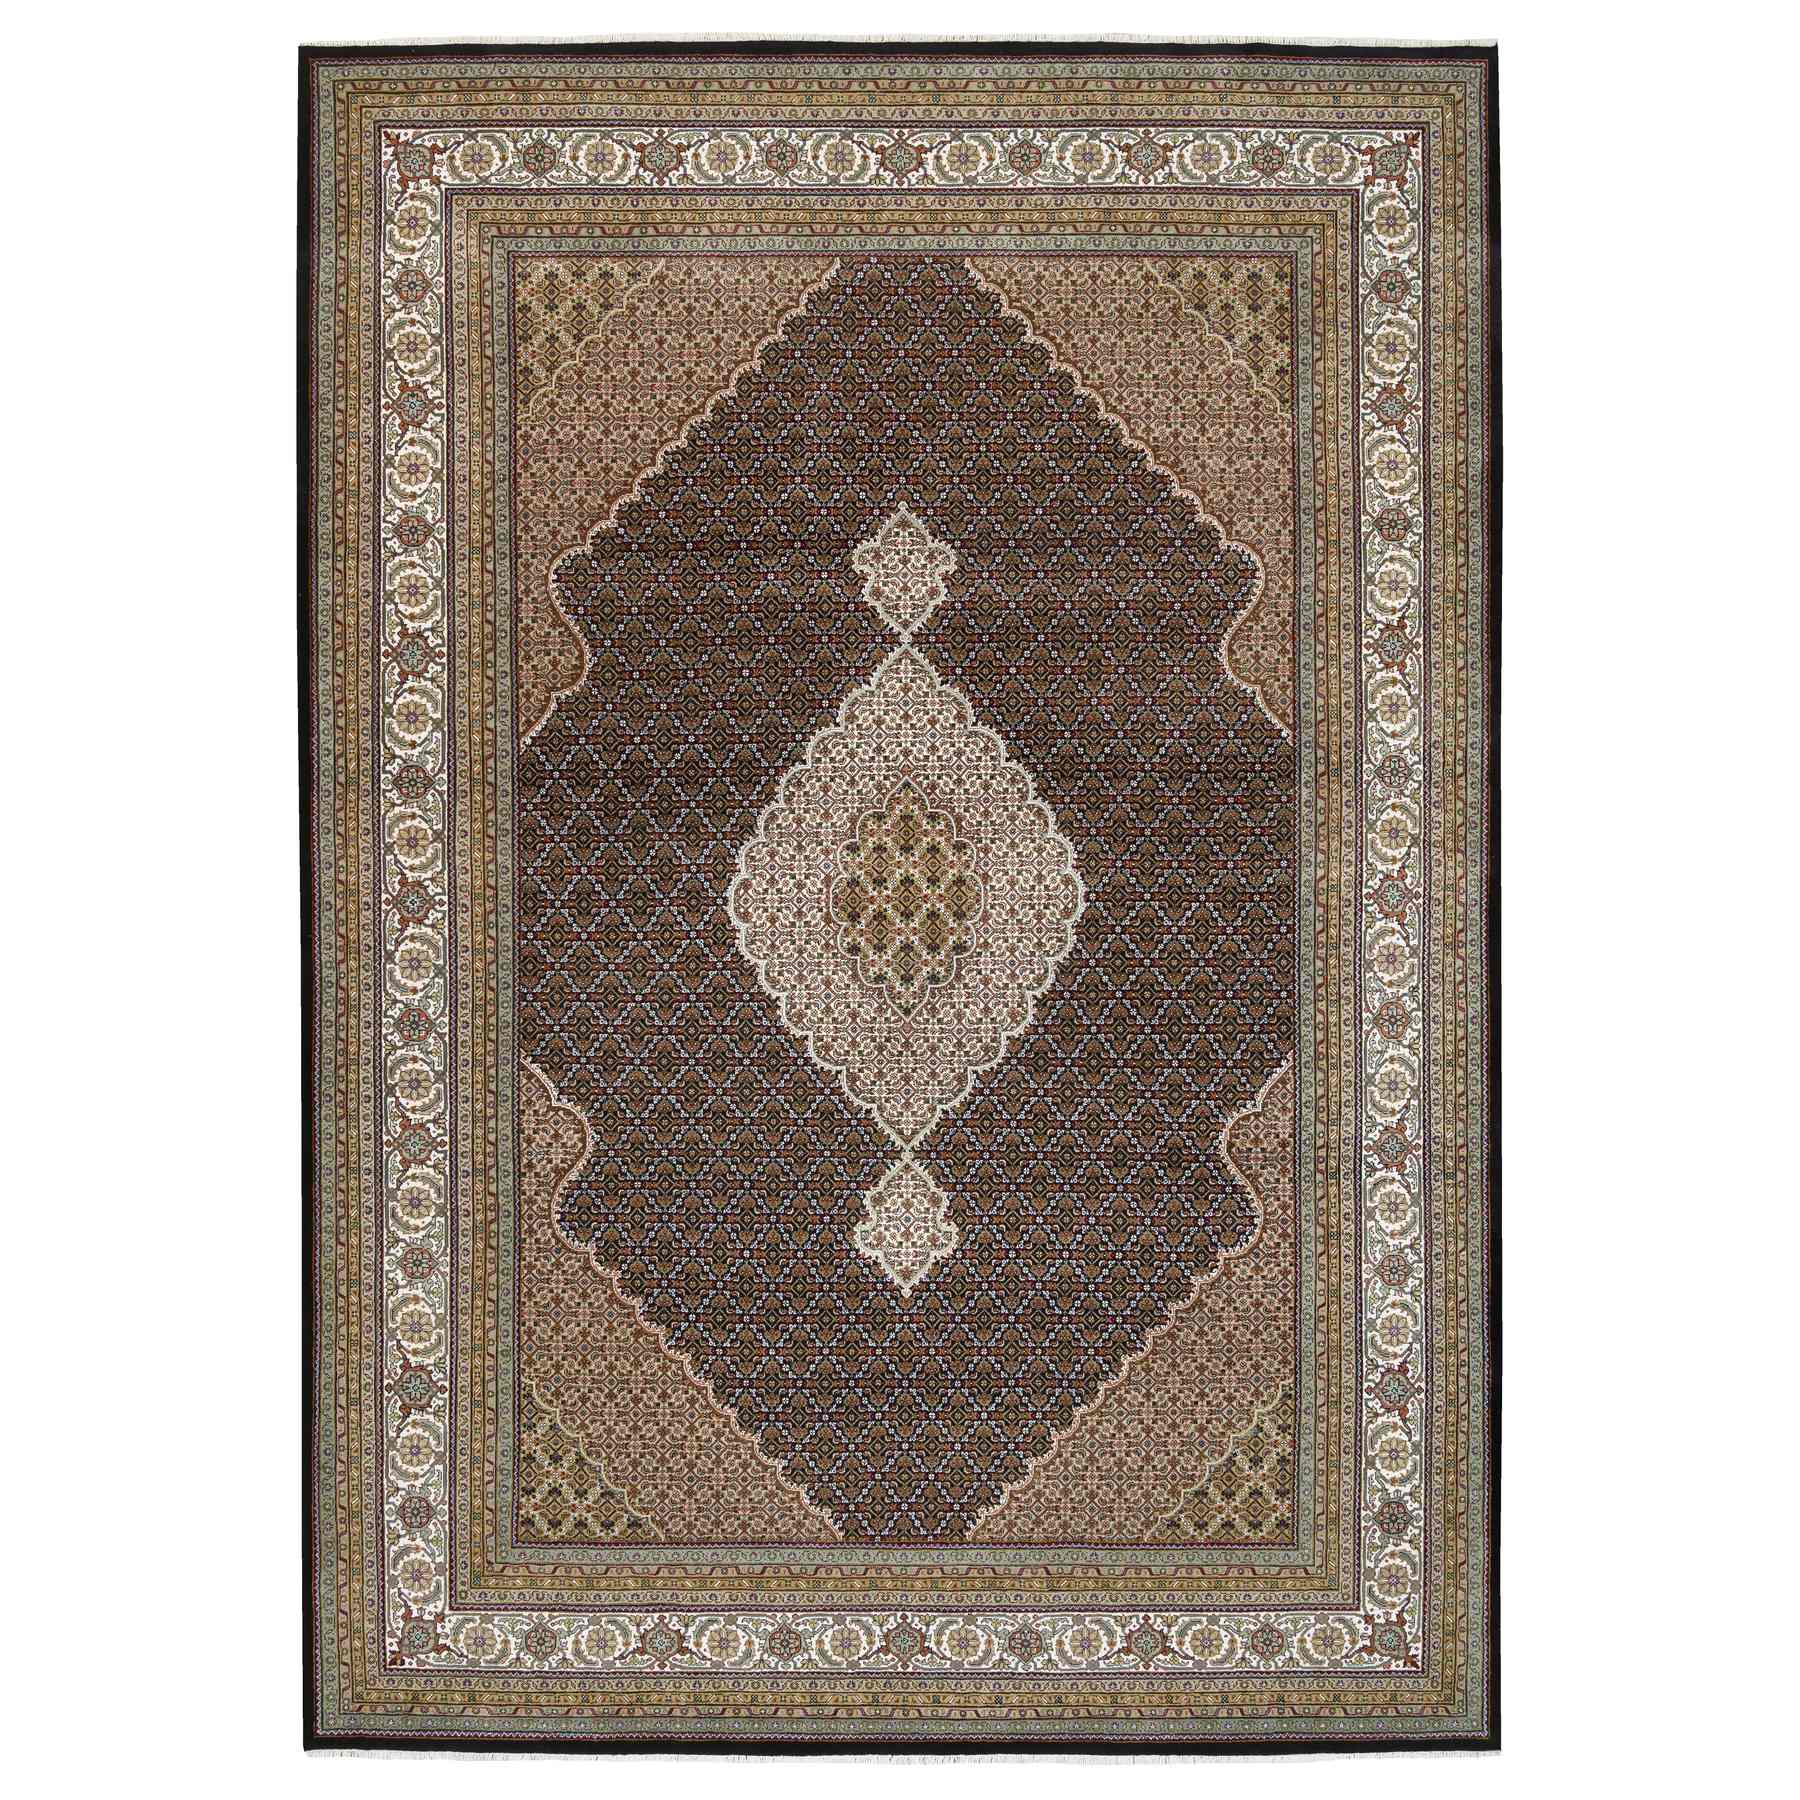 10'x14'2" Rich Black Tabriz Mahi with Fish Medallion Design Wool and Silk 175 KPSI Hand Woven Oriental Rug 